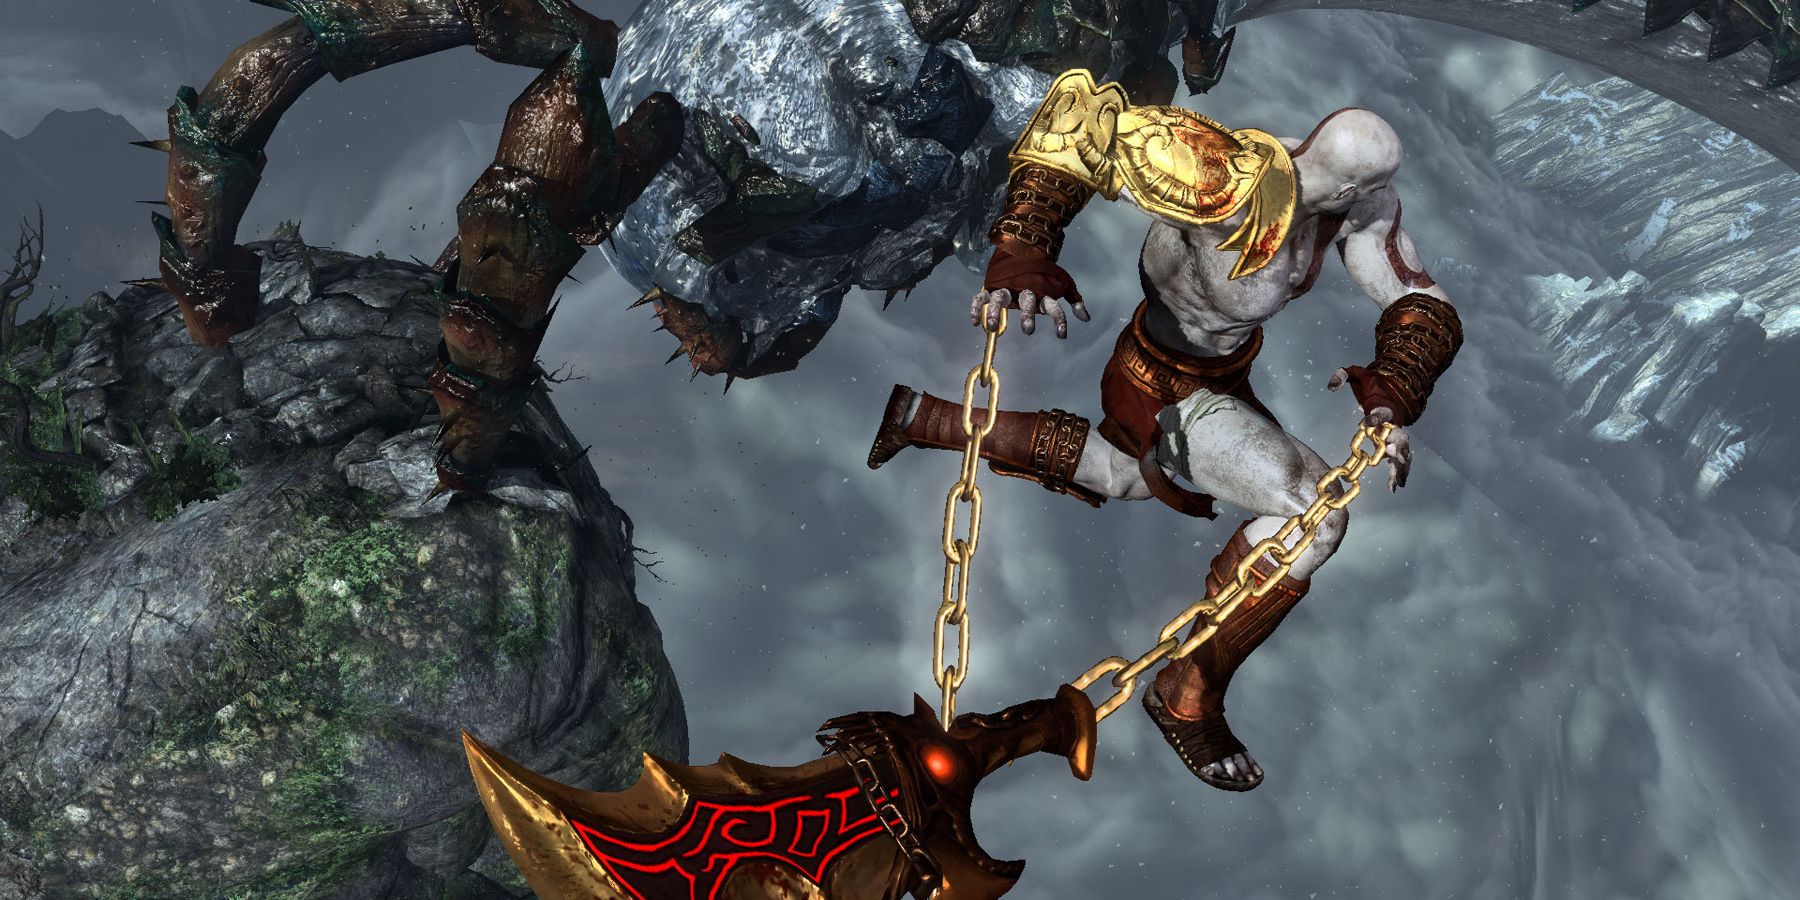 Kratos in God of War 3